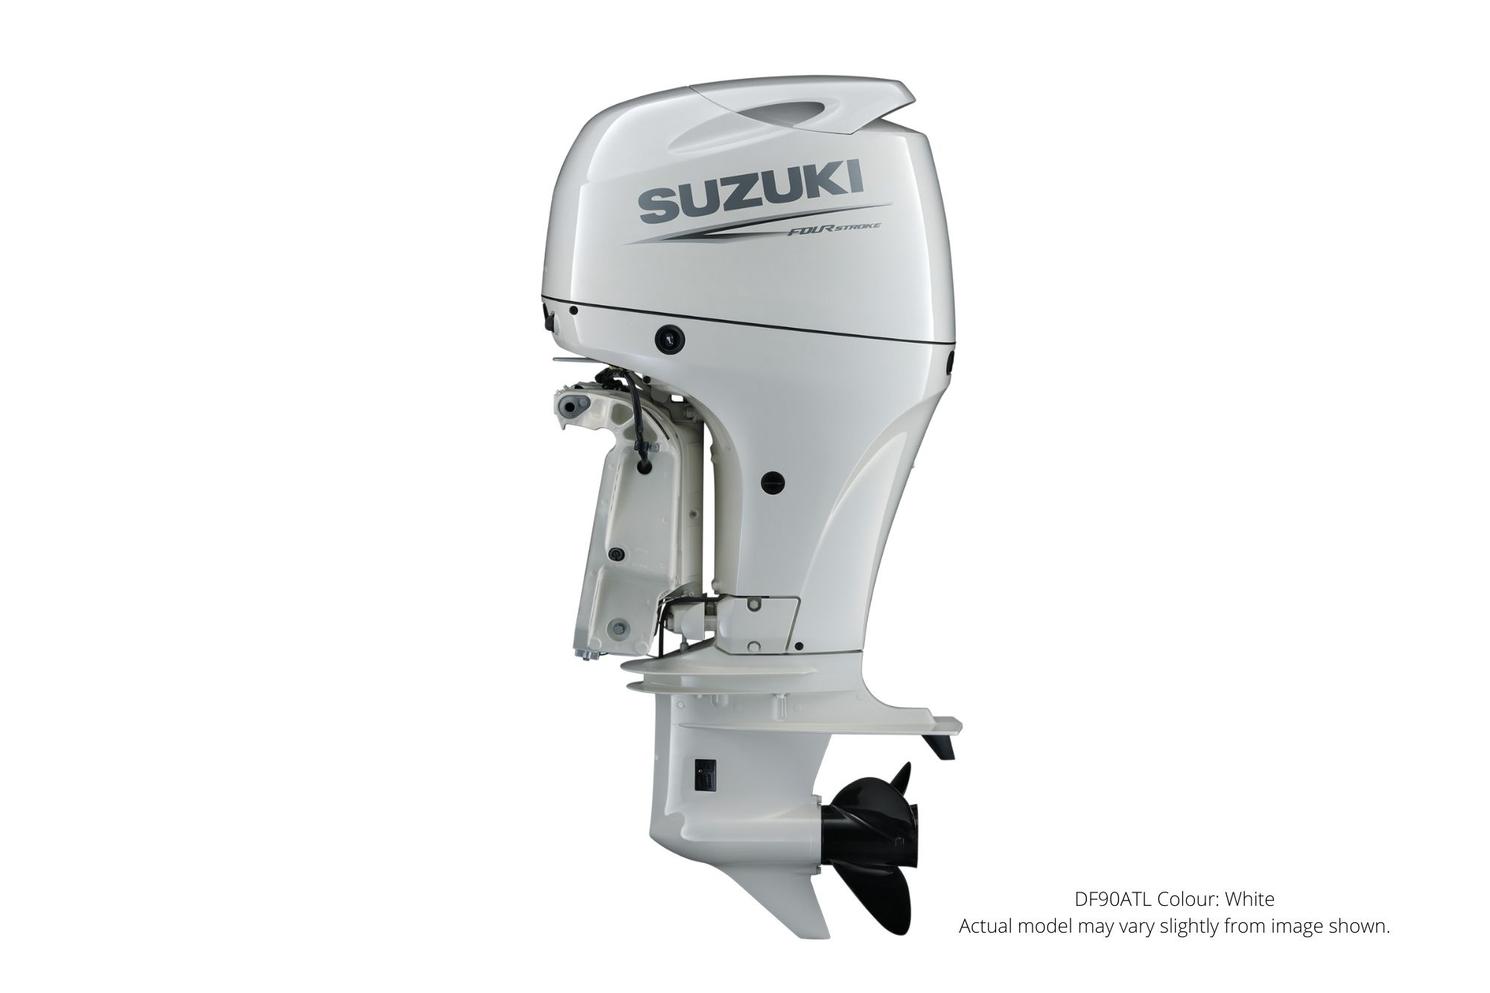 2022 Suzuki DF90A White, Electric, 20" Shaft Drive, Remote Power Tilt and Trim